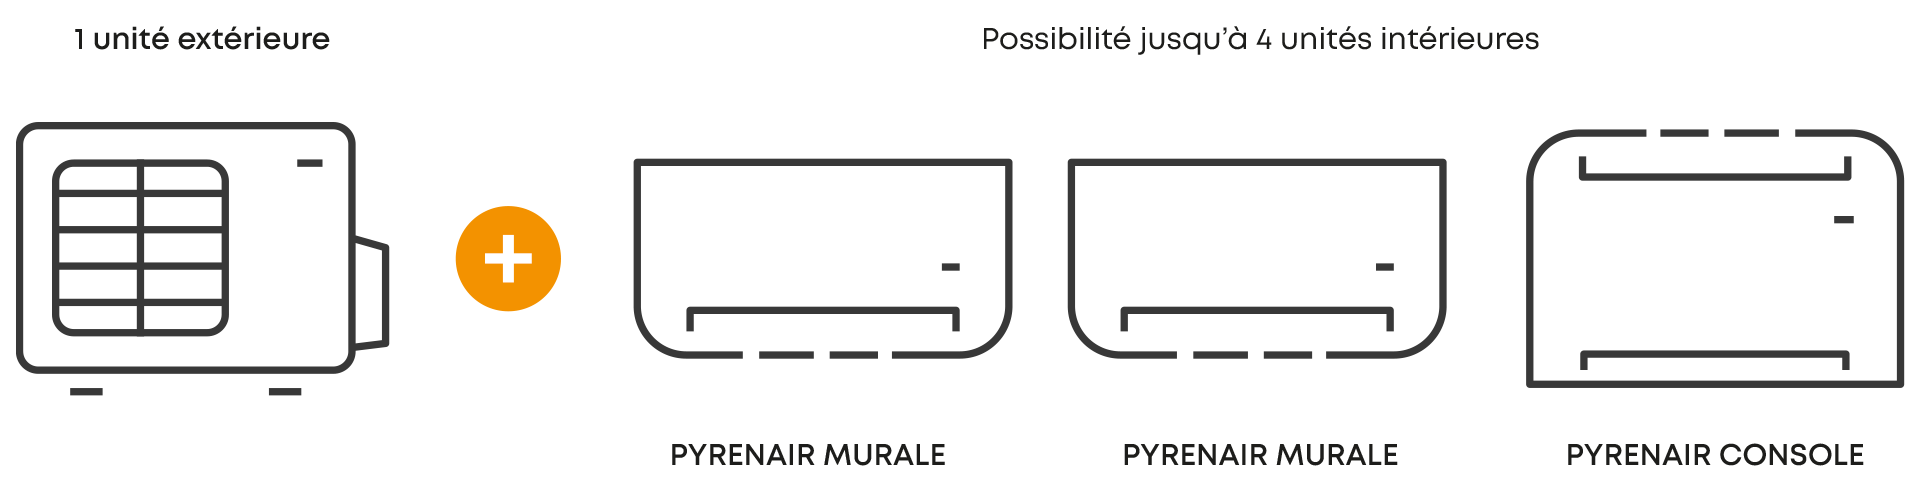 Options Pyrenair Multi-Splits